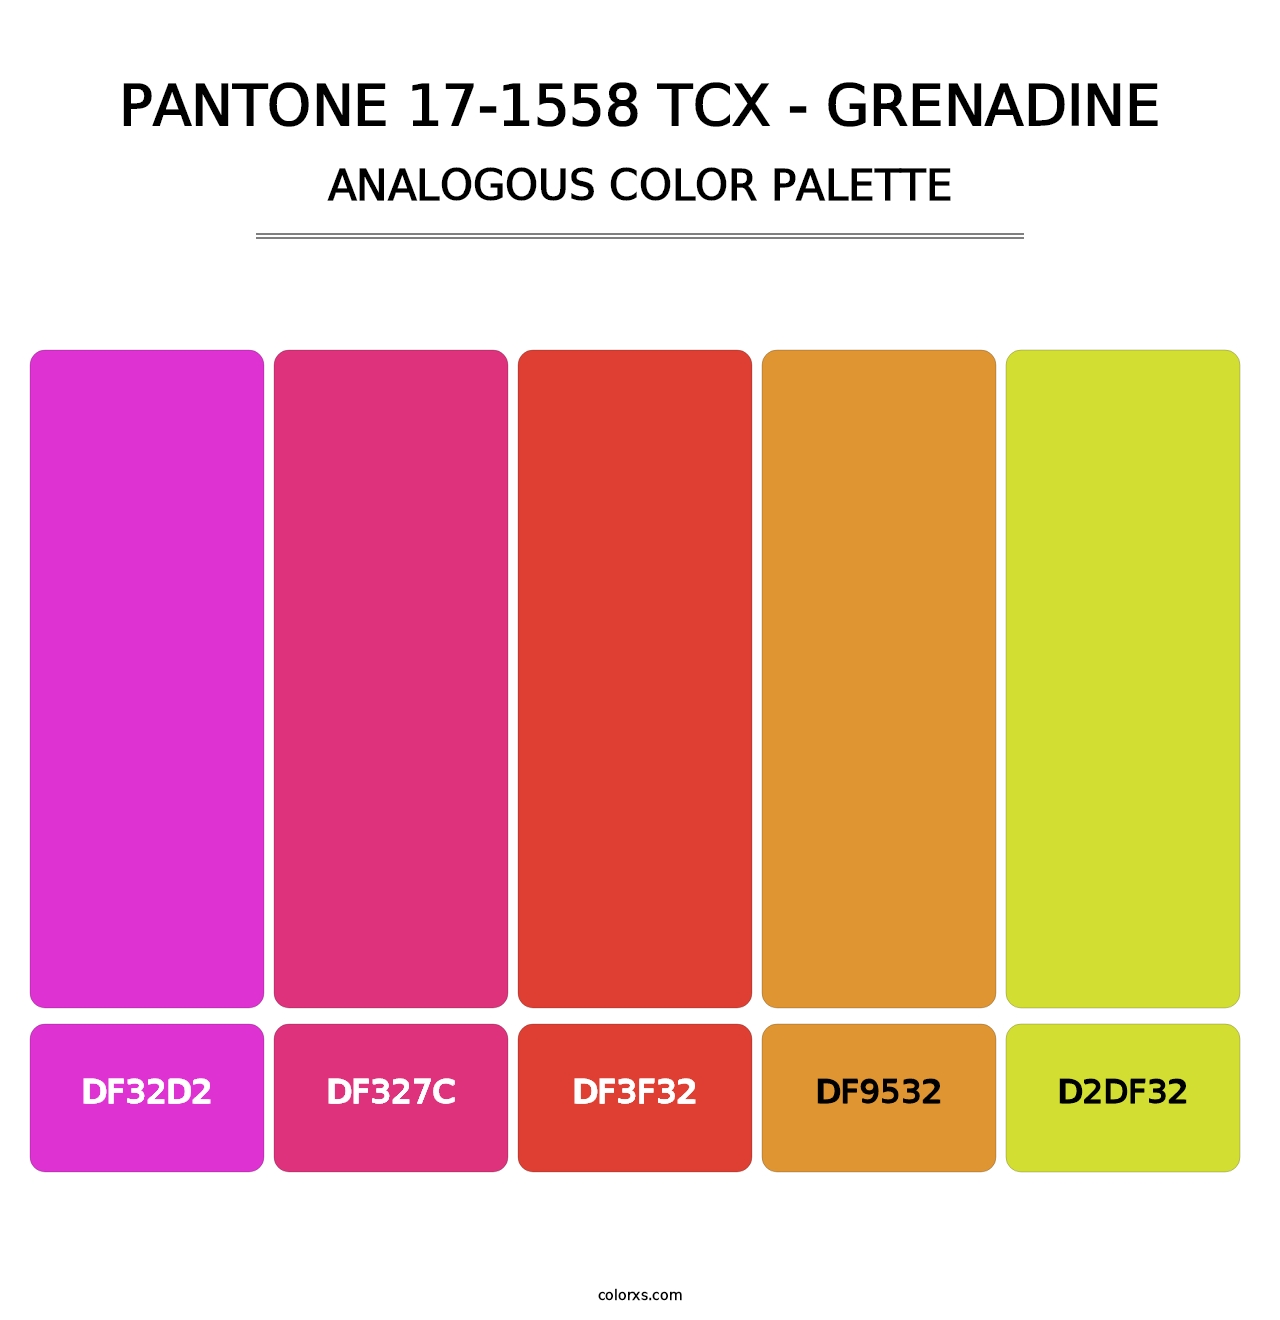 PANTONE 17-1558 TCX - Grenadine - Analogous Color Palette